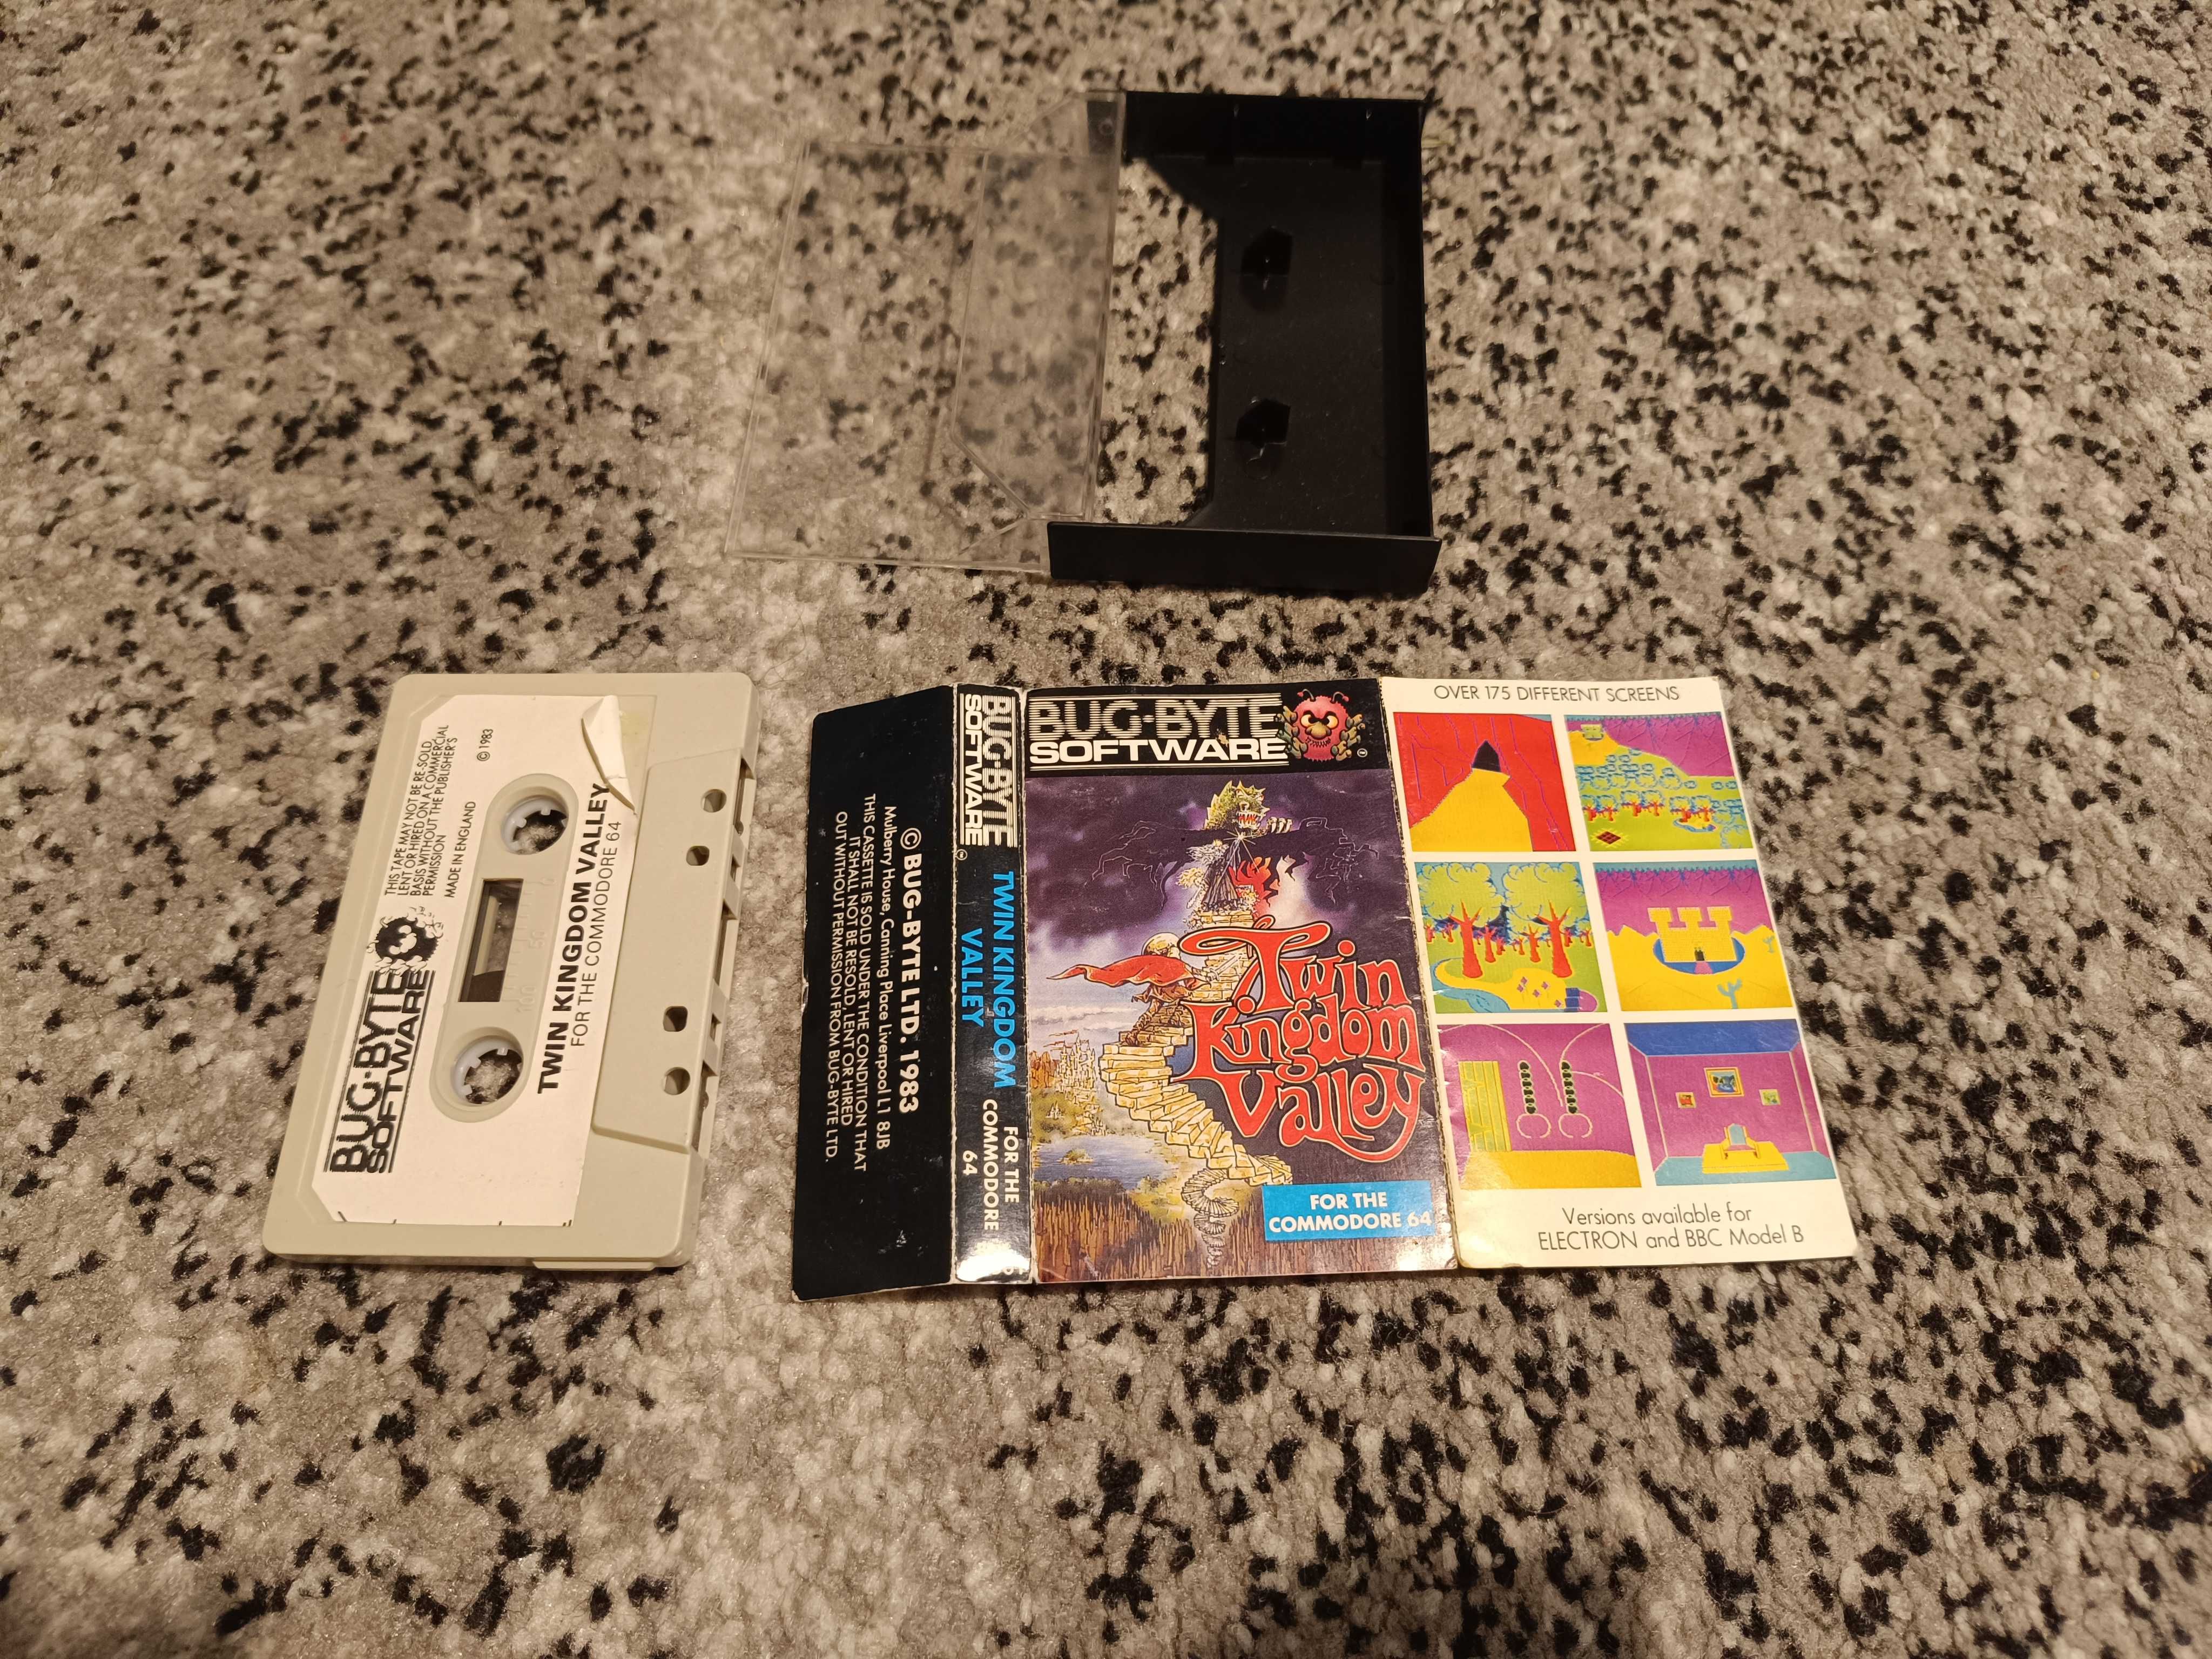 Twin Kingdom Valley C64 kaseta commodore 64